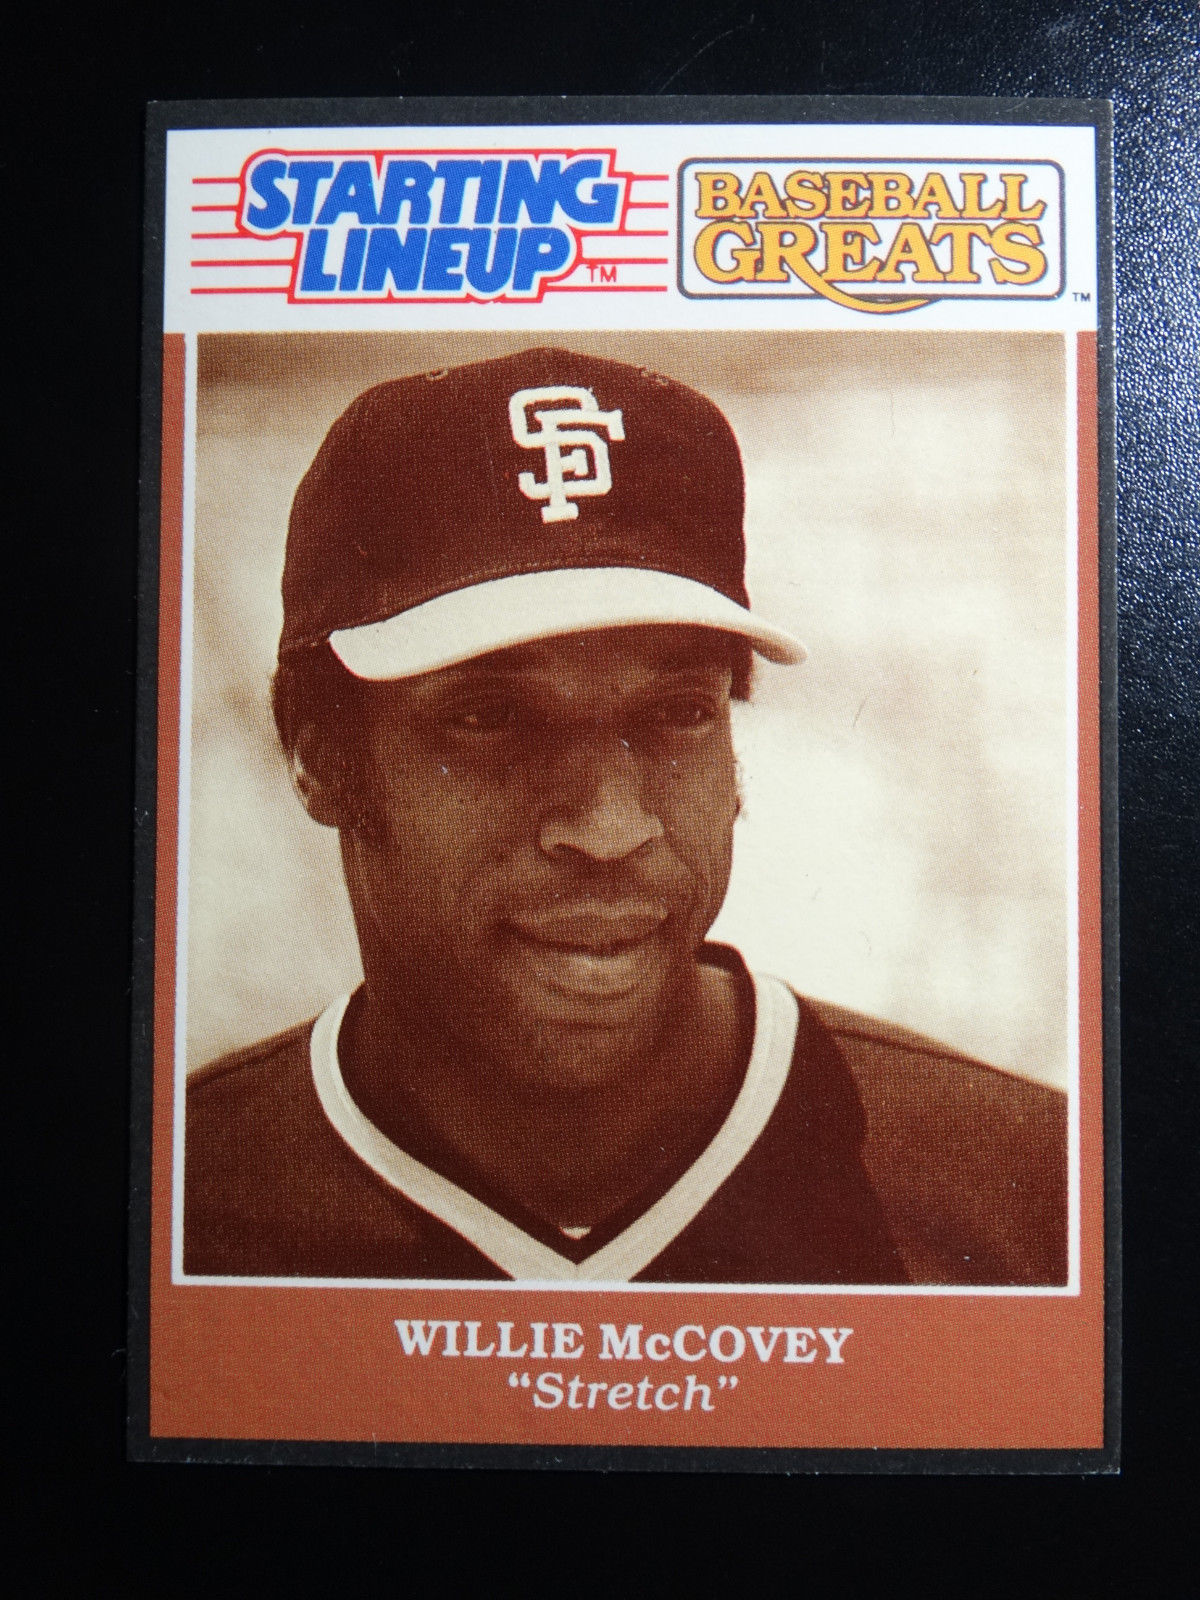 1989 Willie McCovey San Francisco Giants Baseball Greats Kenner Baseball Card - $5.00